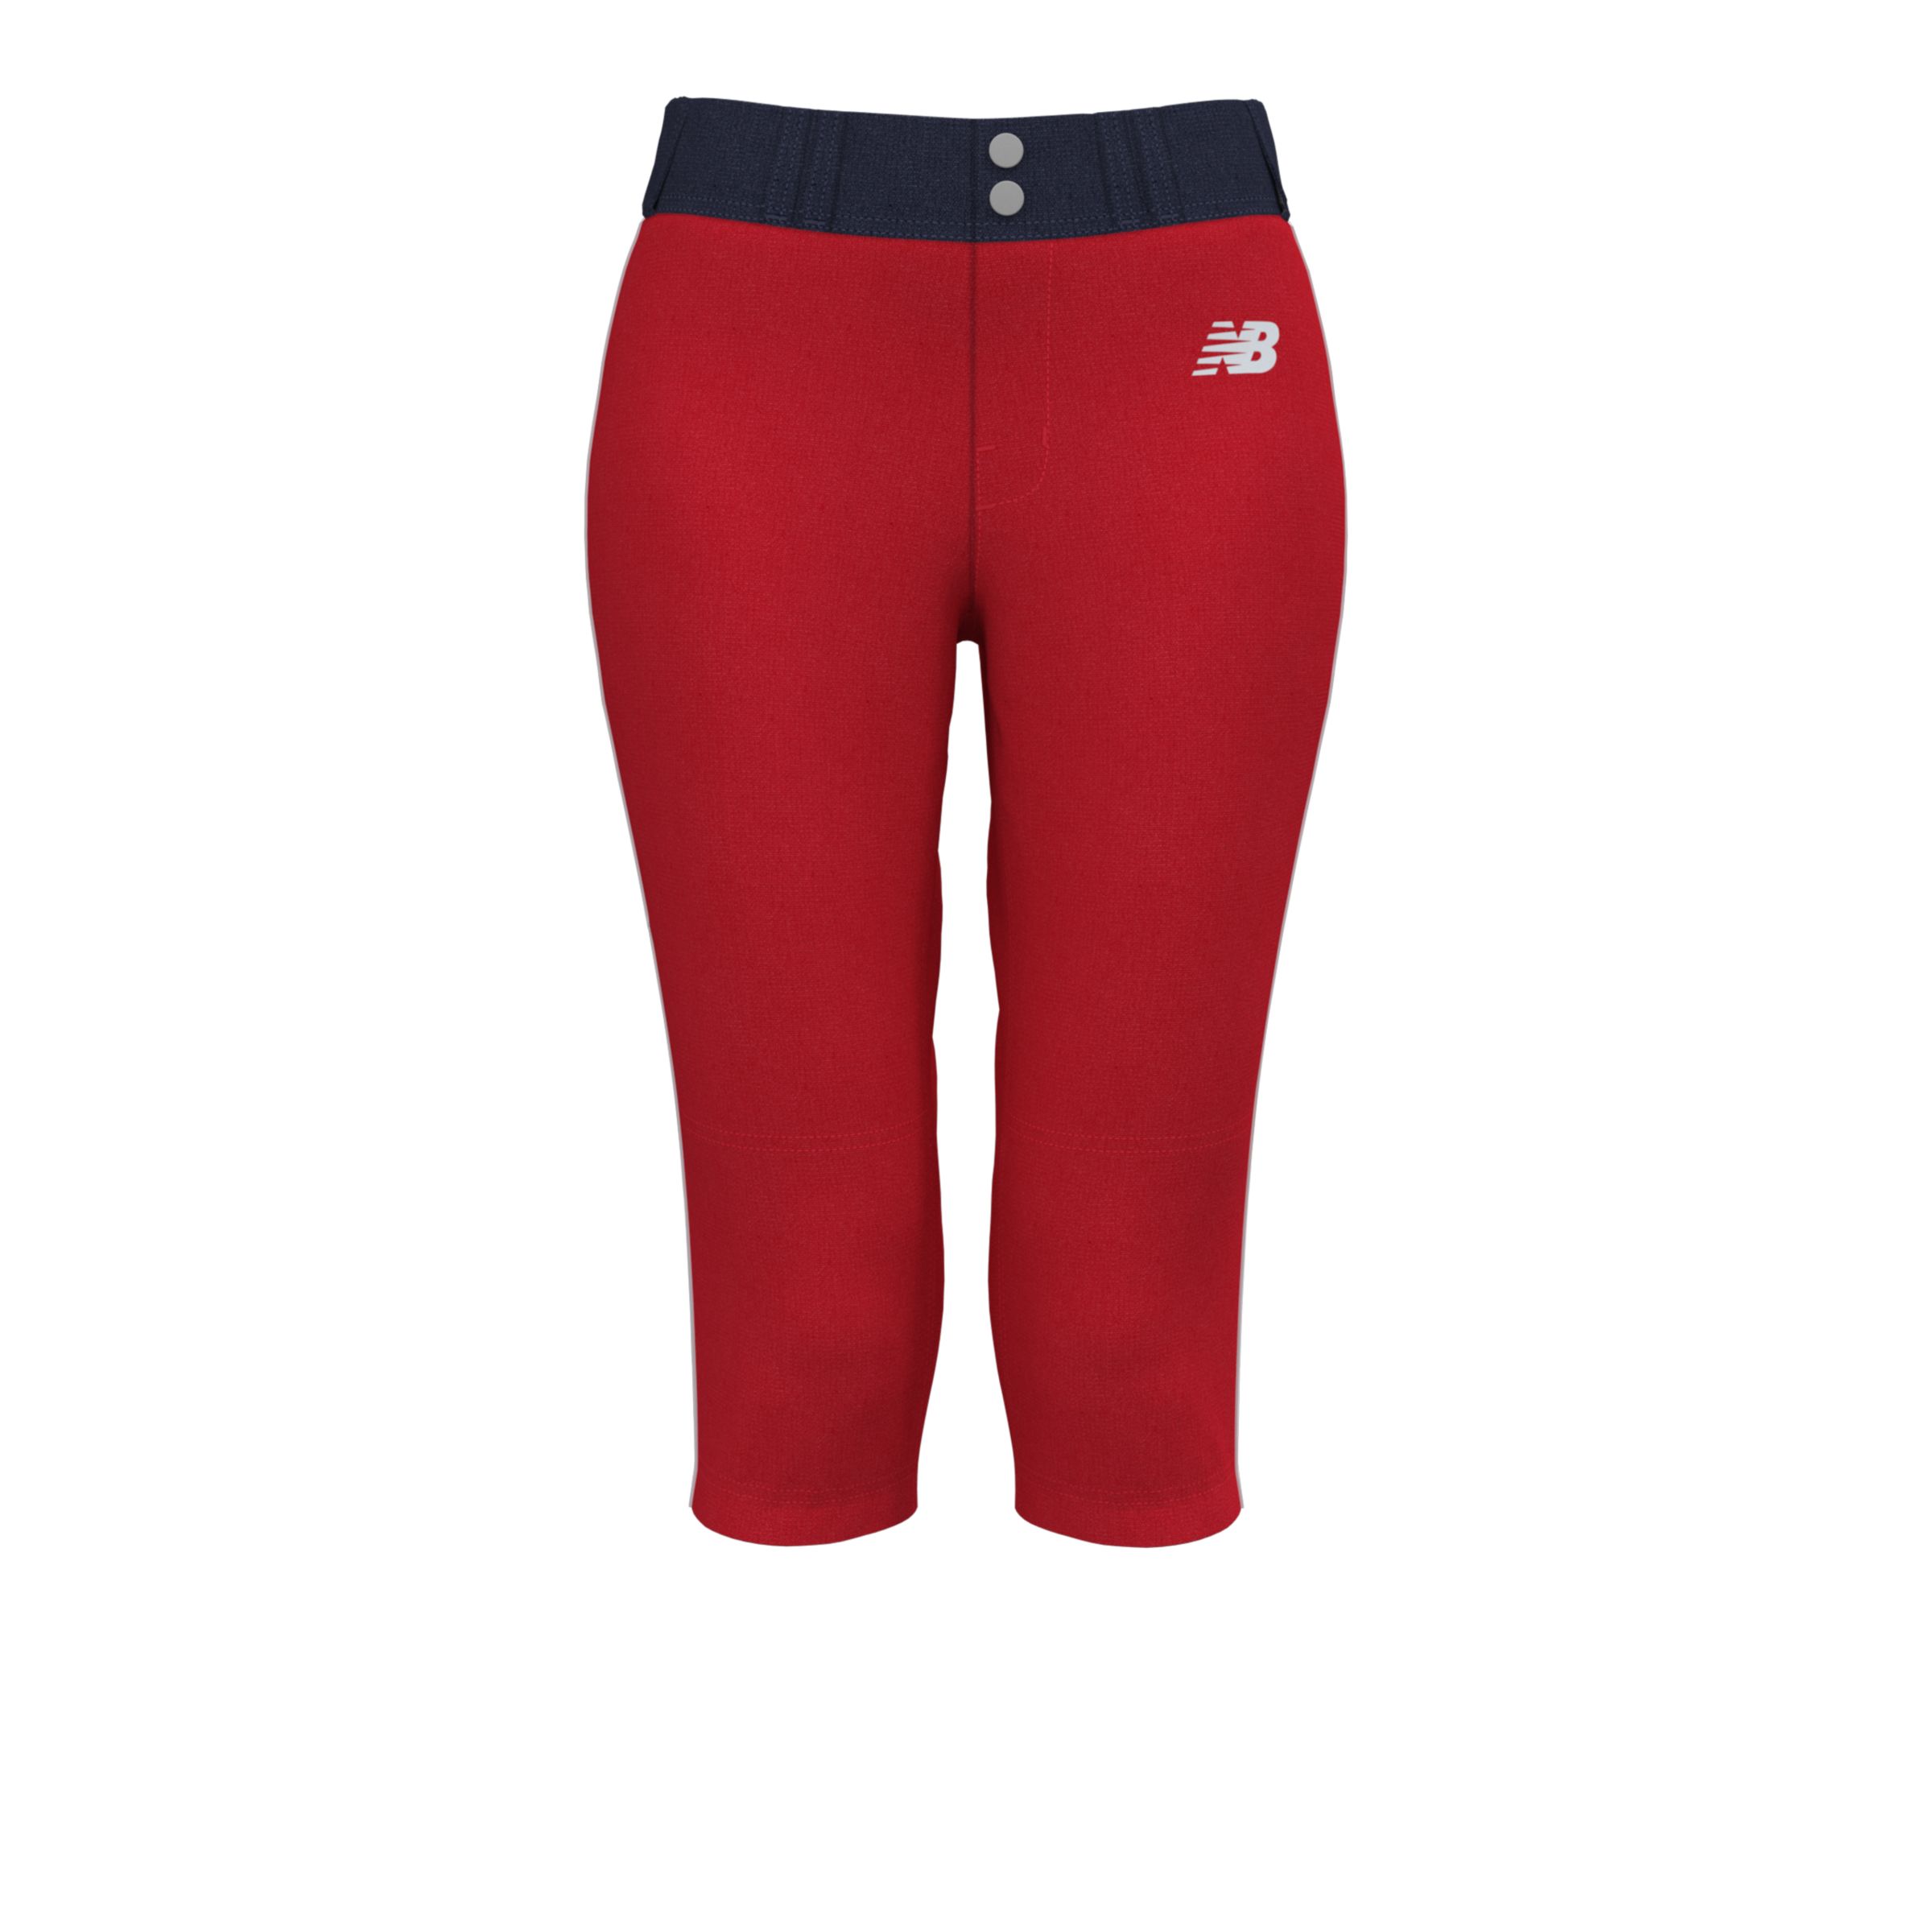 New Balance Women's Contour Softball Pants